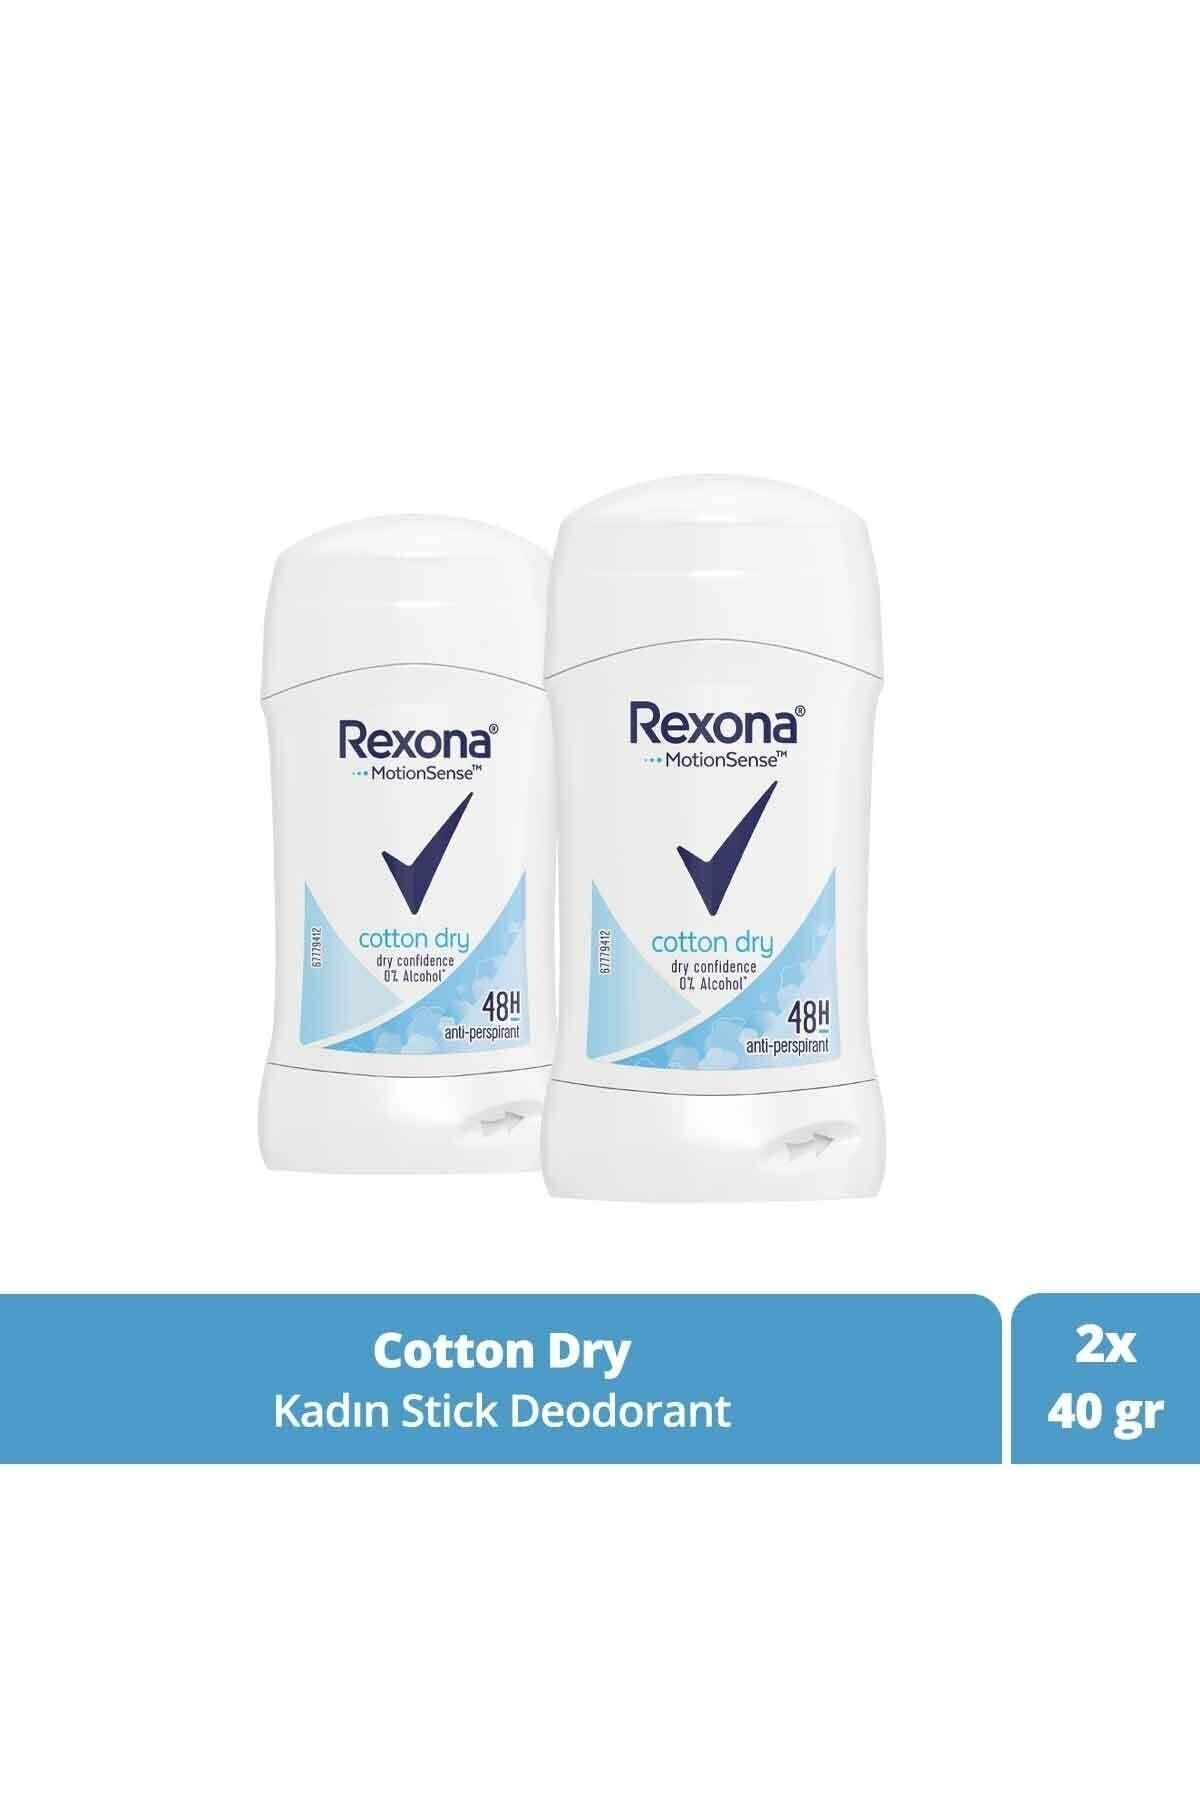 Rexona Motion Sense Kadın Stick Deodorant Cotton Dry 48 Saat Koruma 40 g X 2 Adet